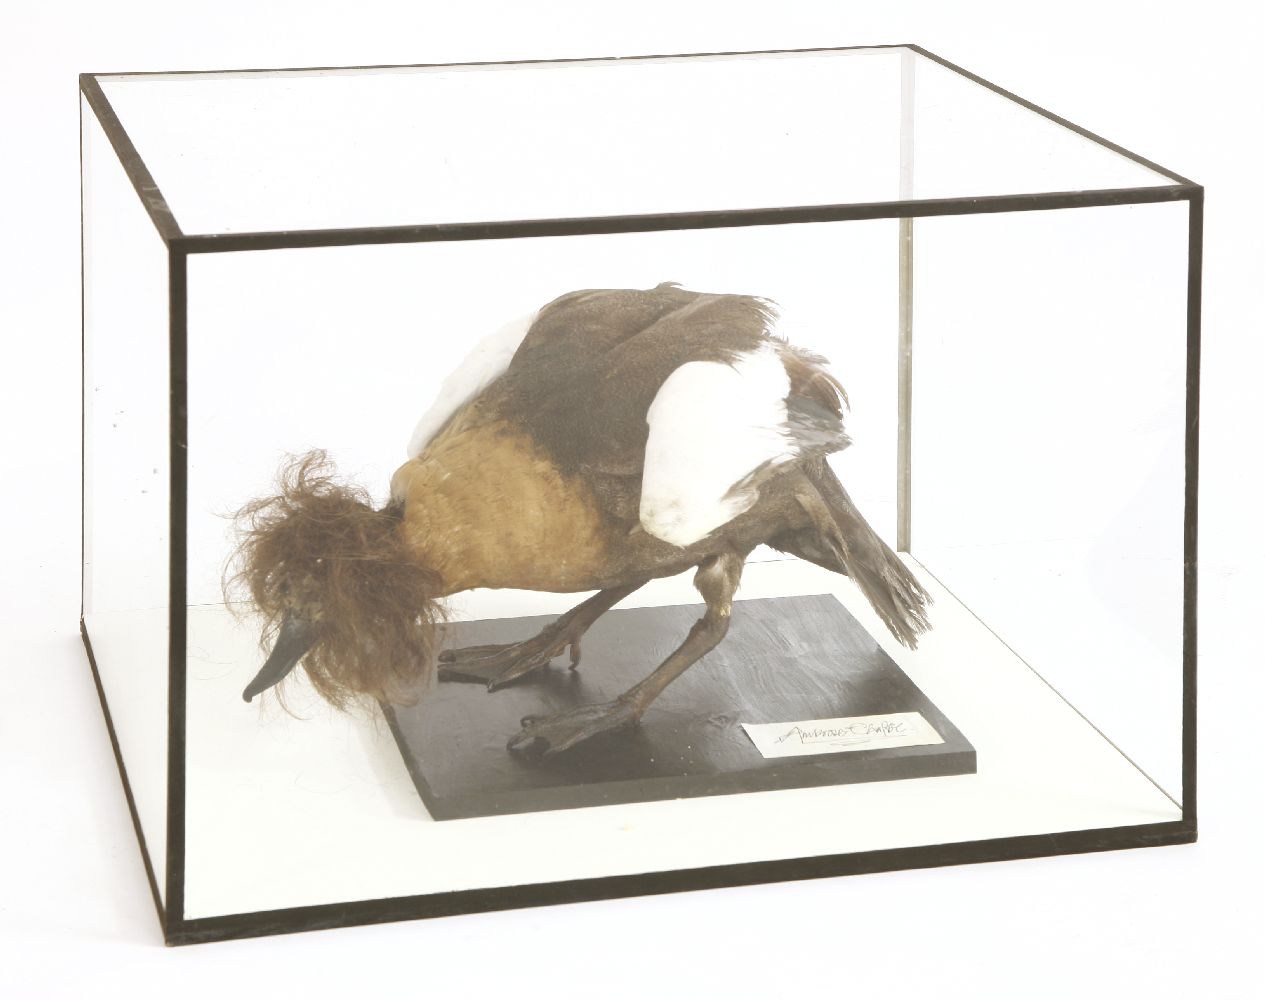 KATE BUSH,2005, an Ambrose Chapel taxidermy duck, modelled as Kate Bush, mounted in a glass case,